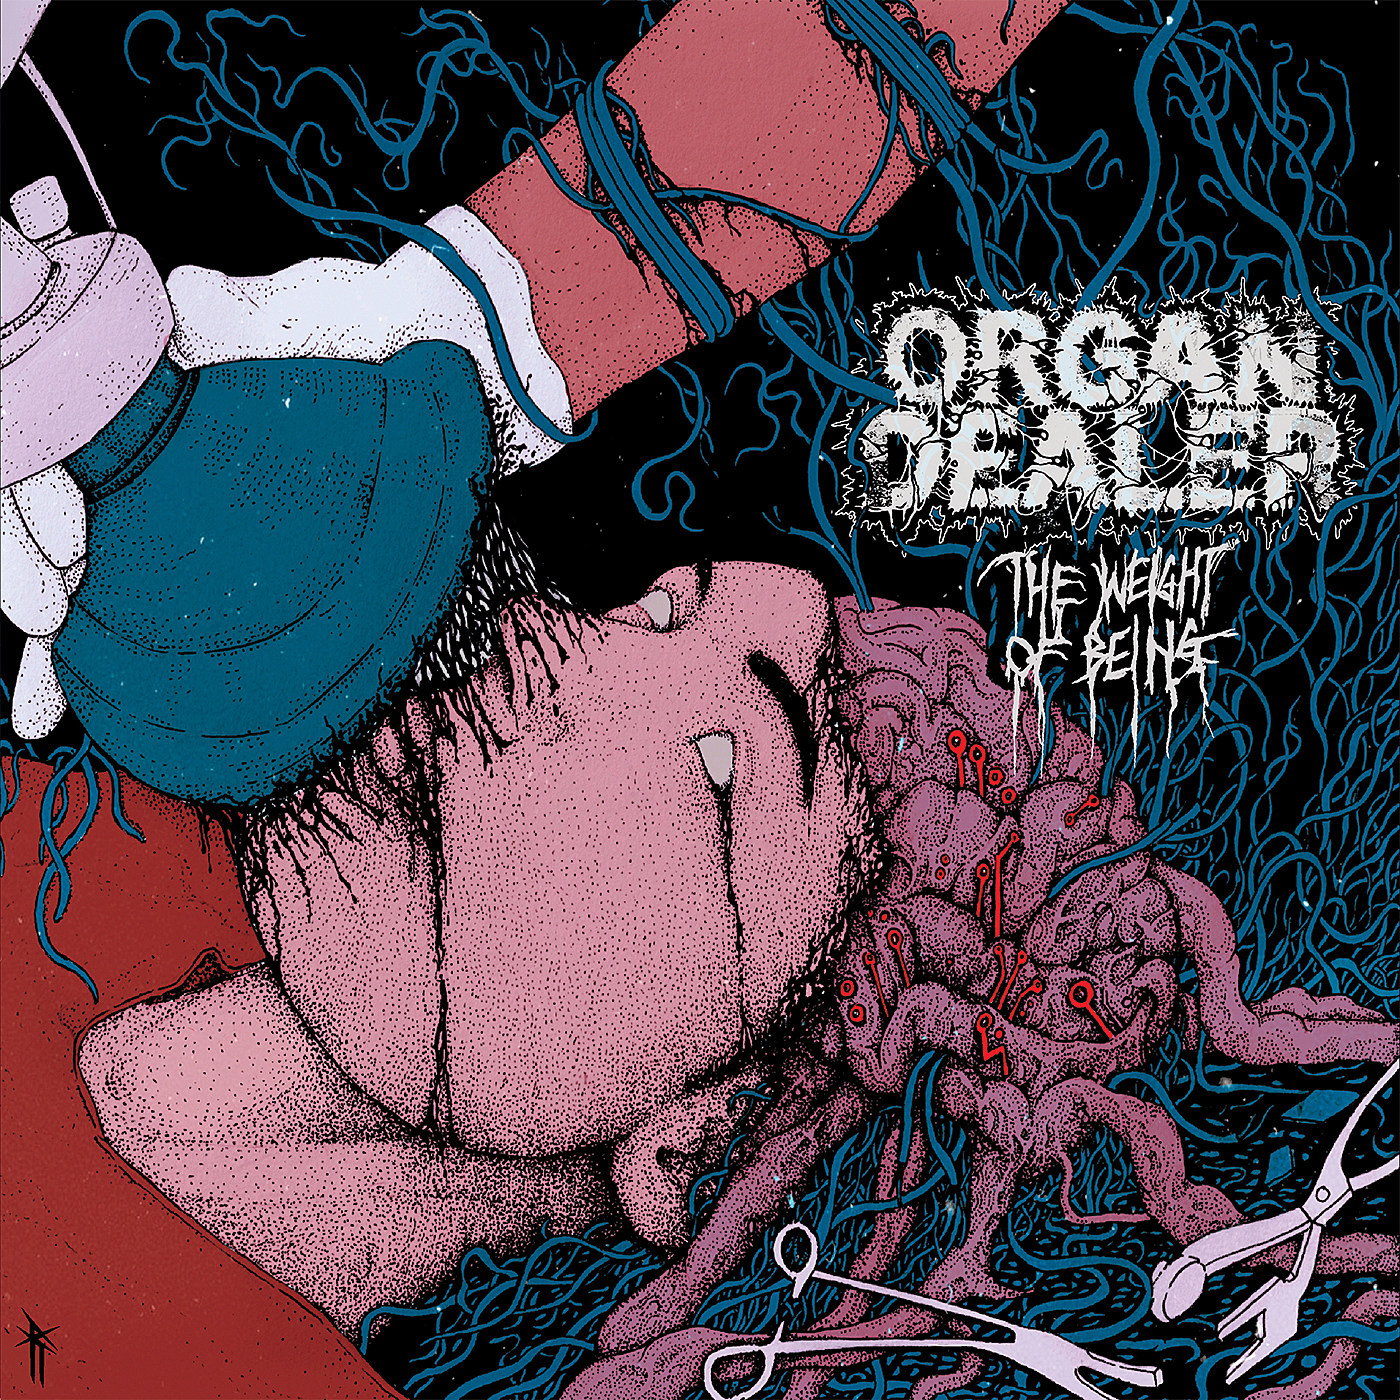 Organ Dealer - The Weight of Being